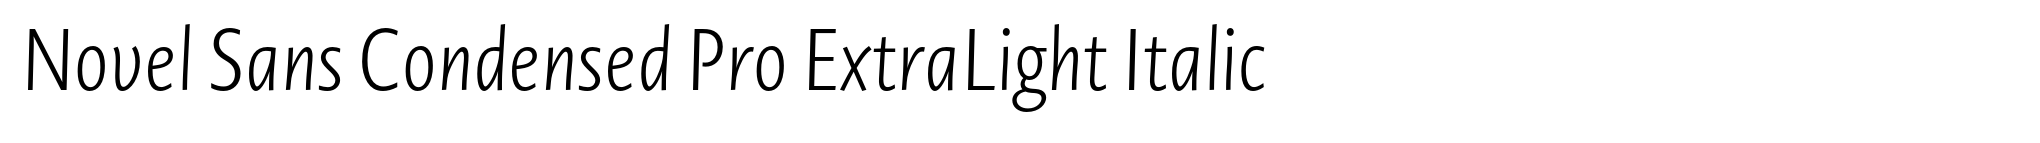 Novel Sans Condensed Pro ExtraLight Italic image